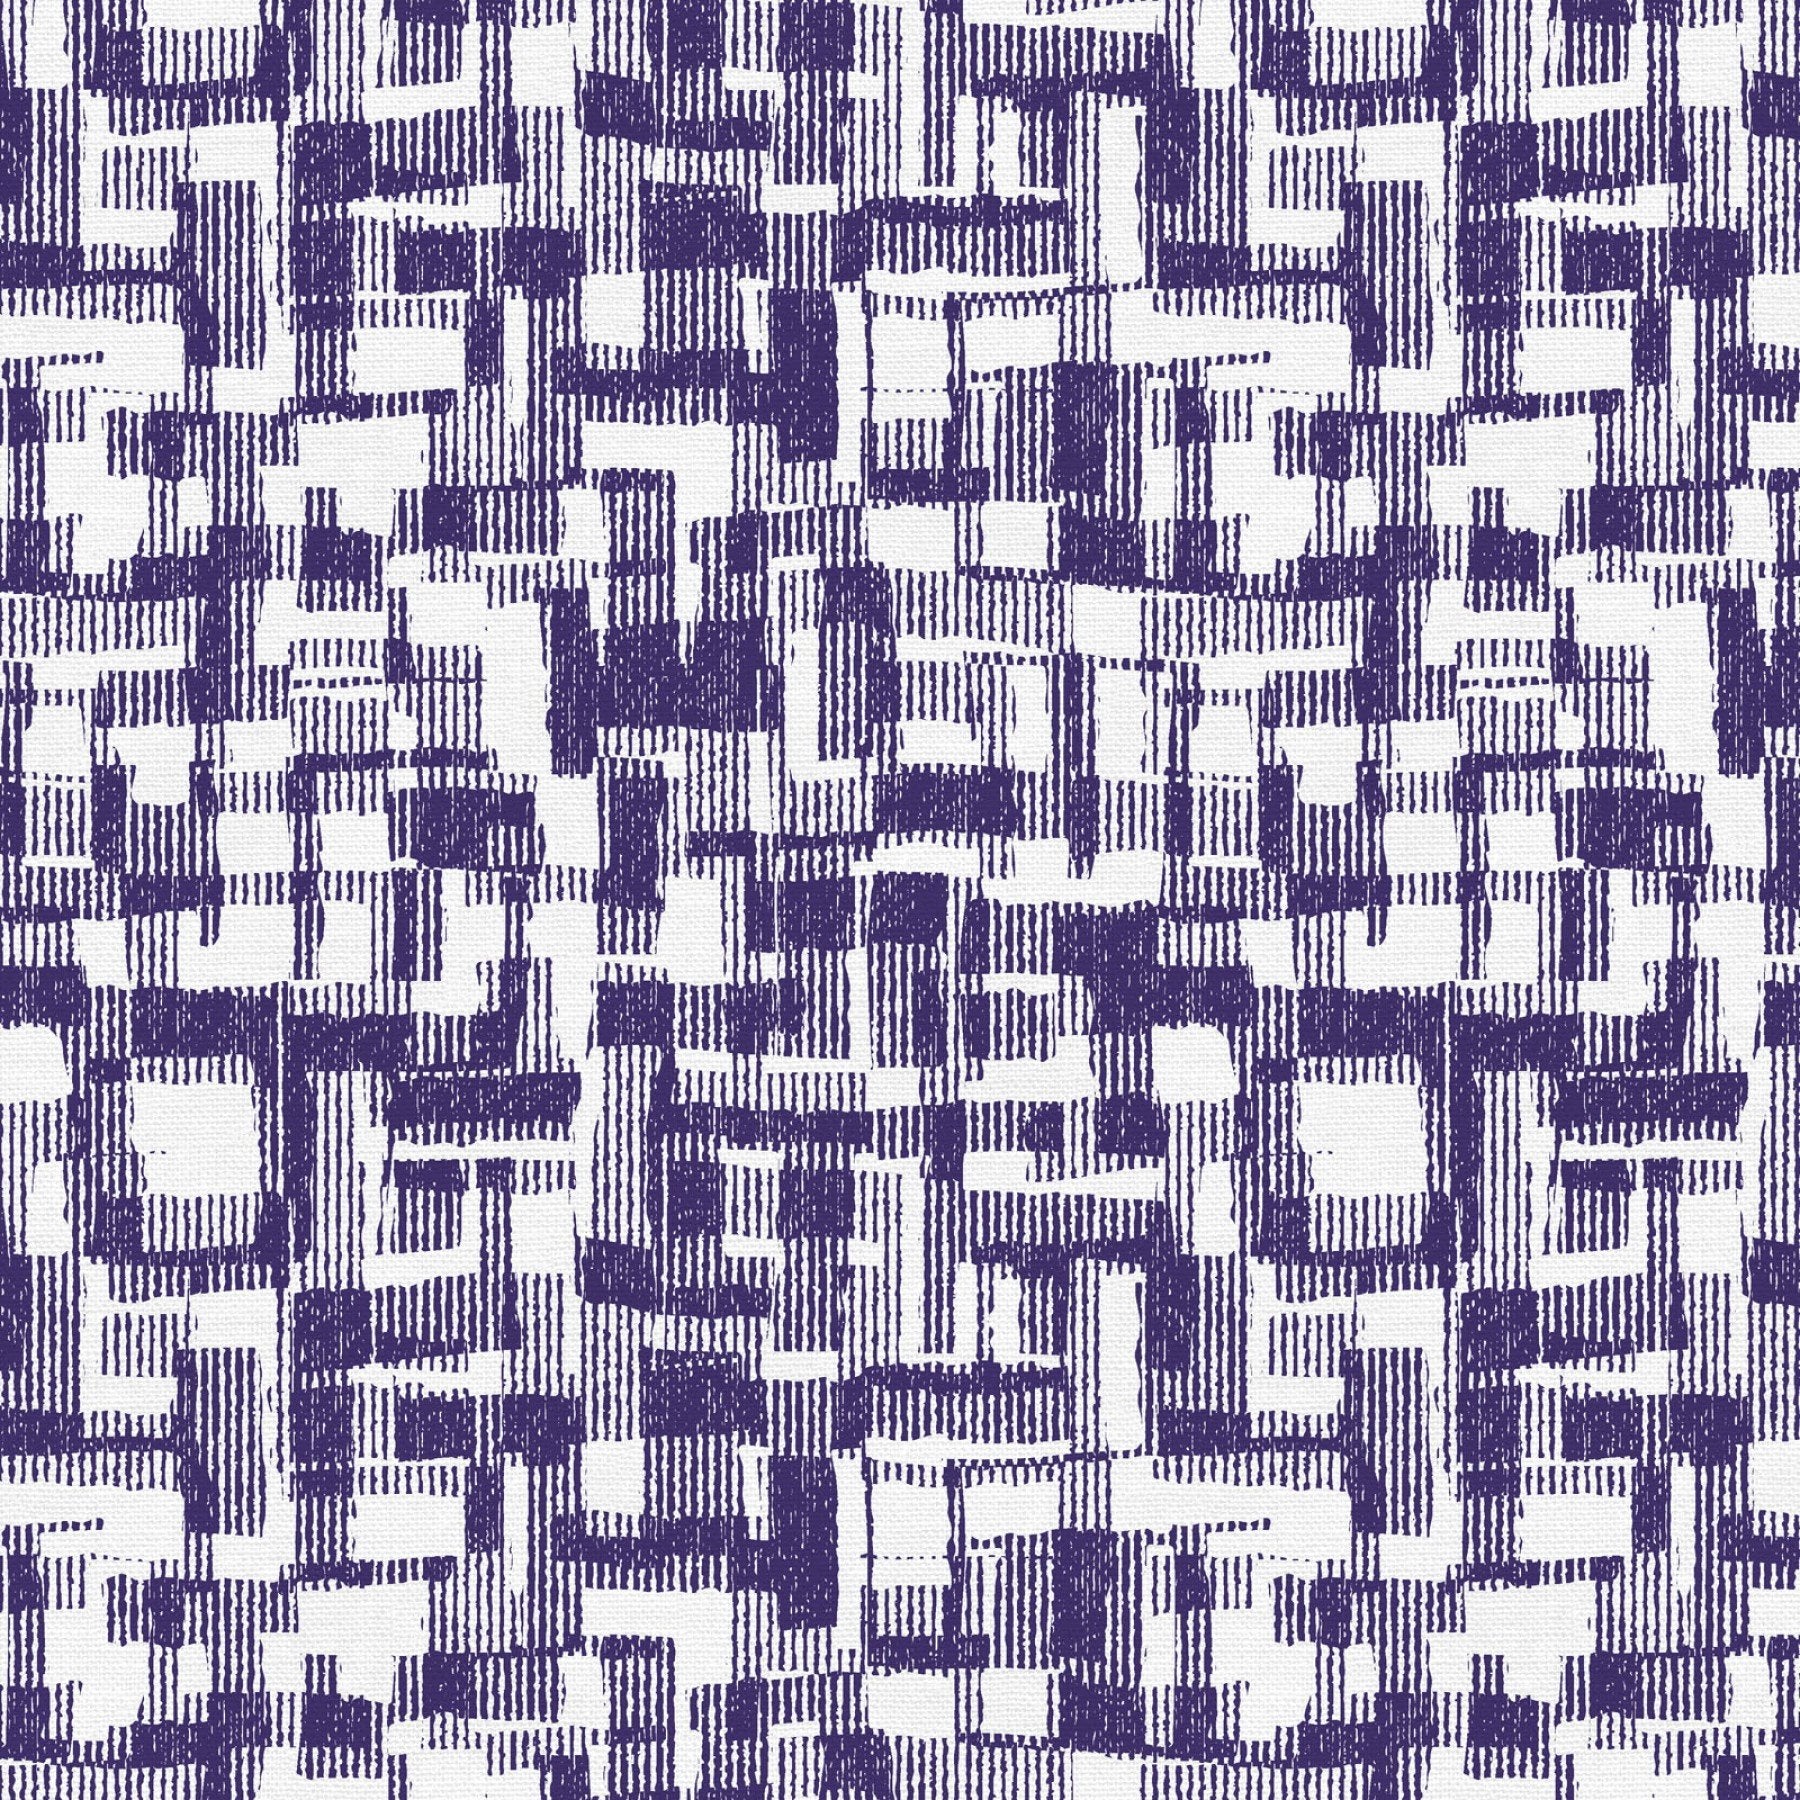 Purple Eggplant Barcodes Cotton Wideback Fabric